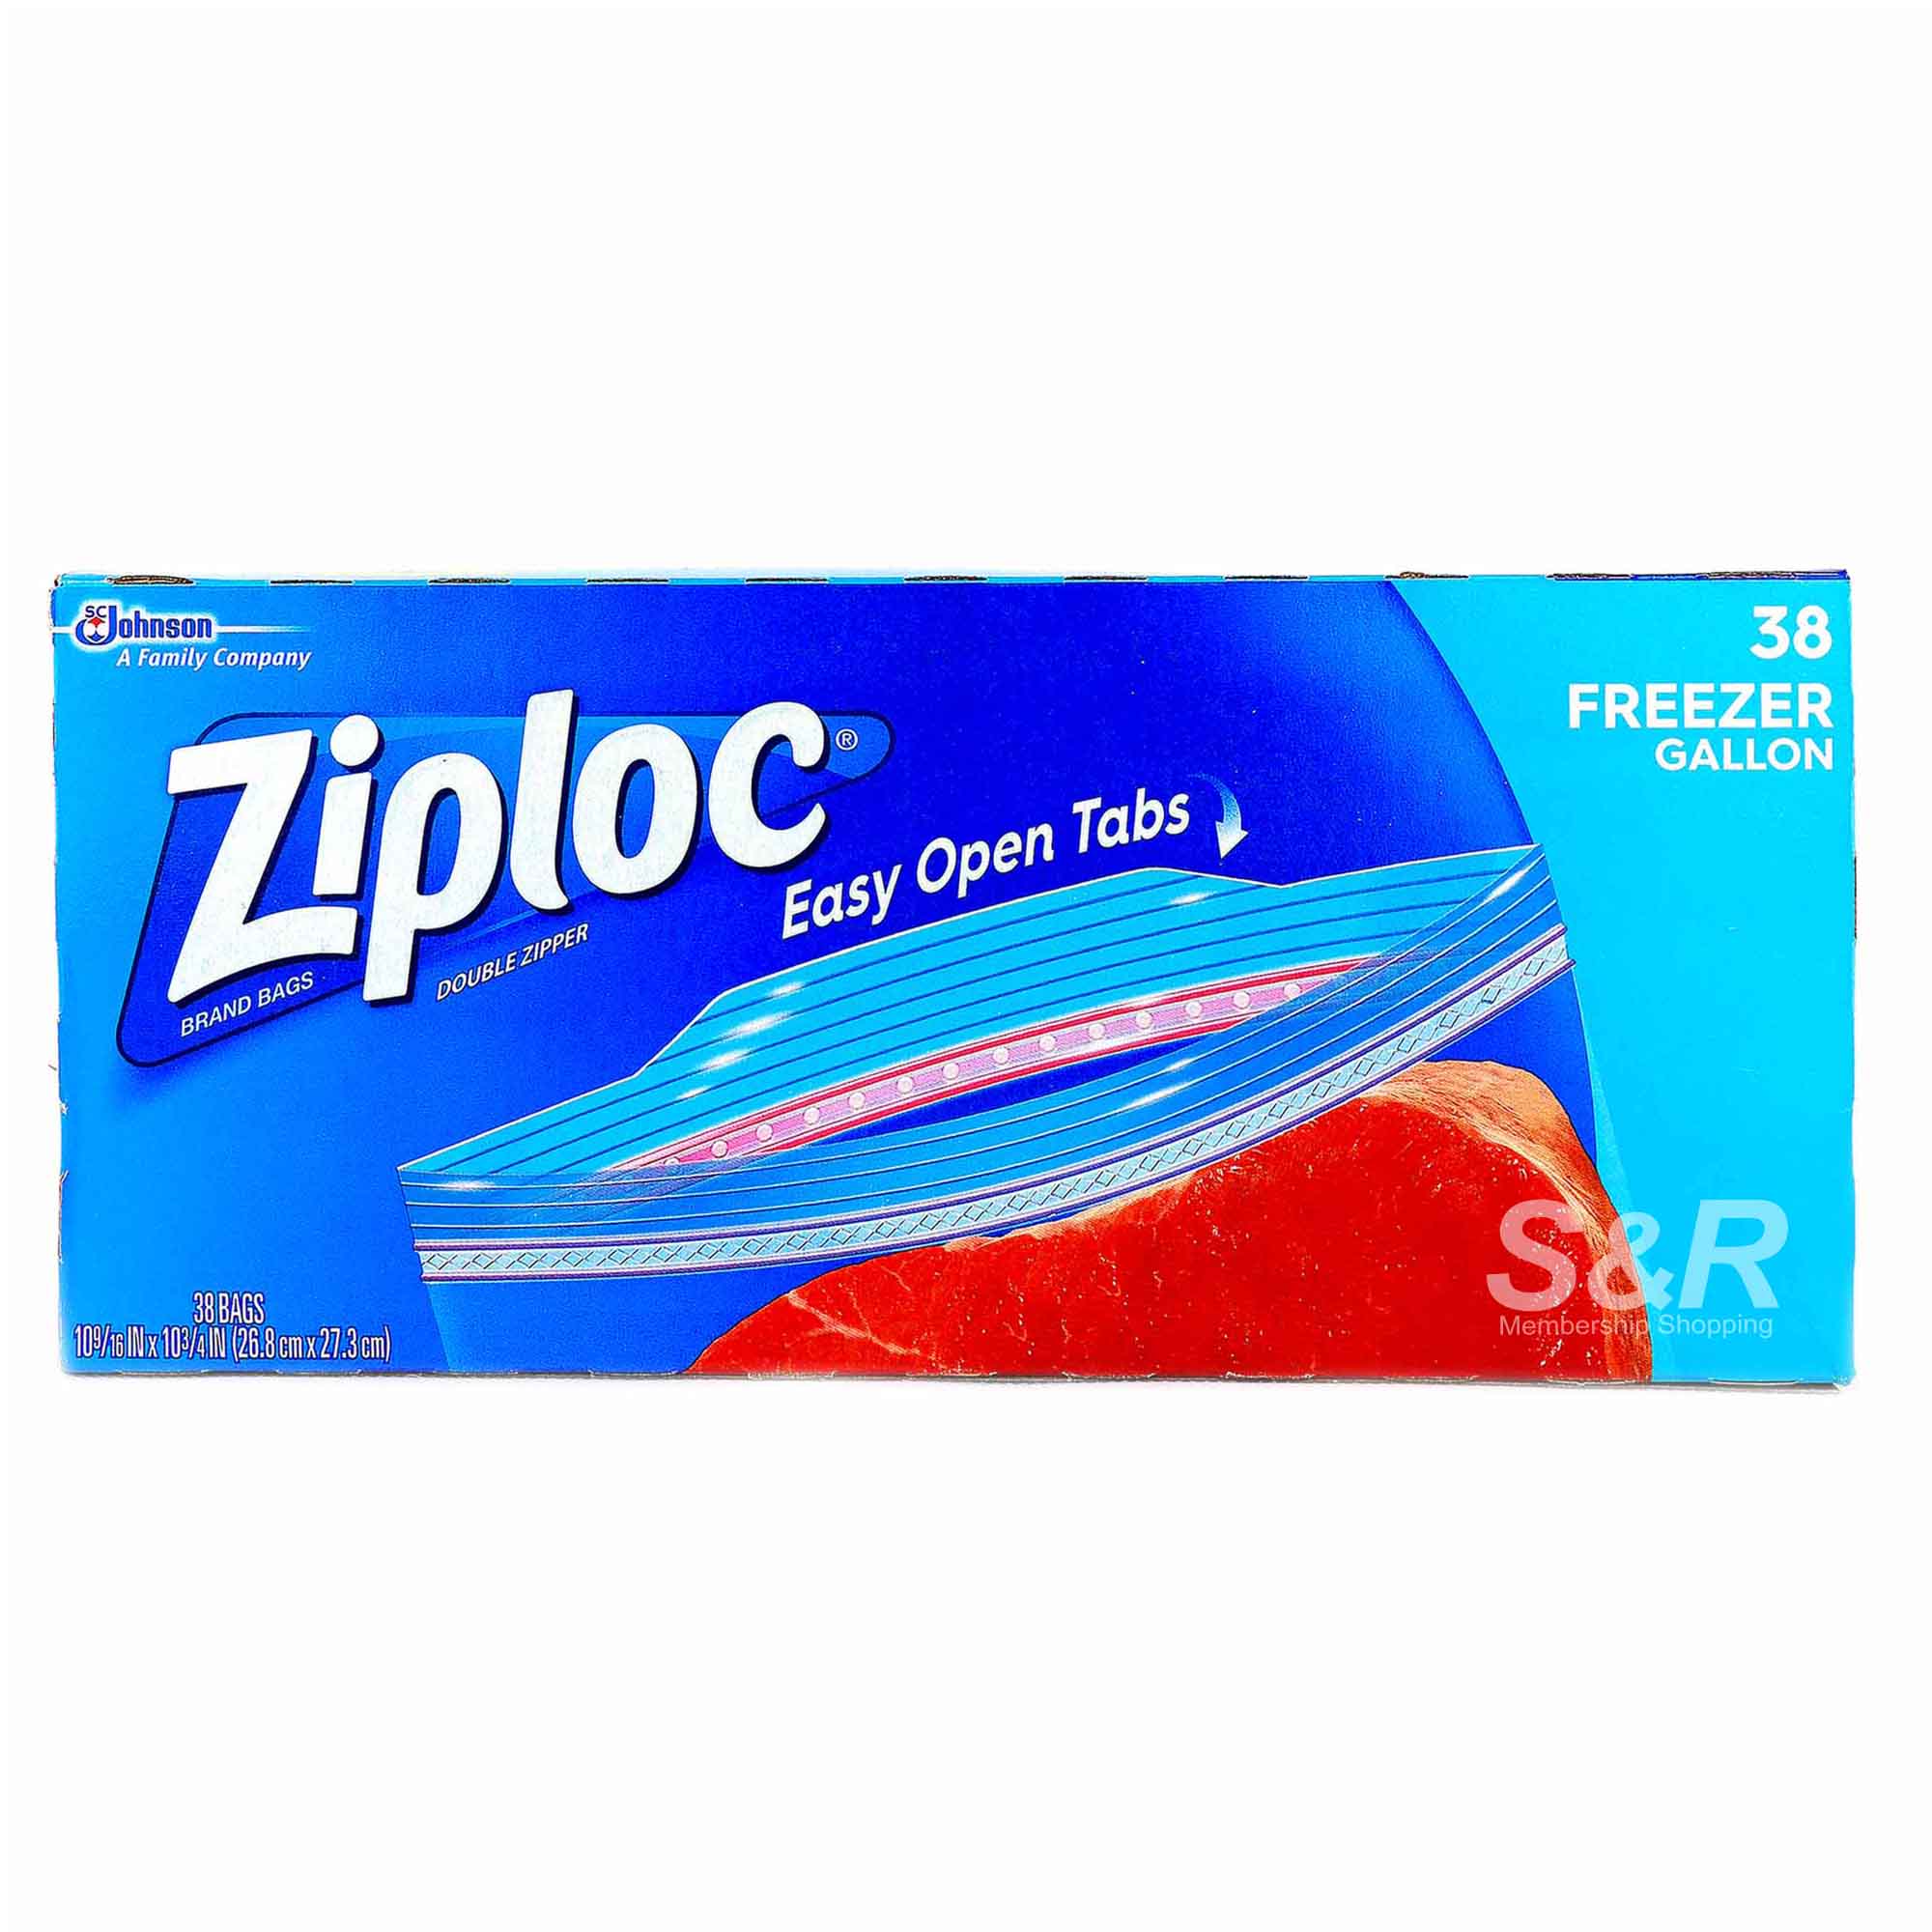 Ziploc Easy Open Tabs Freezer Gallon 38pcs